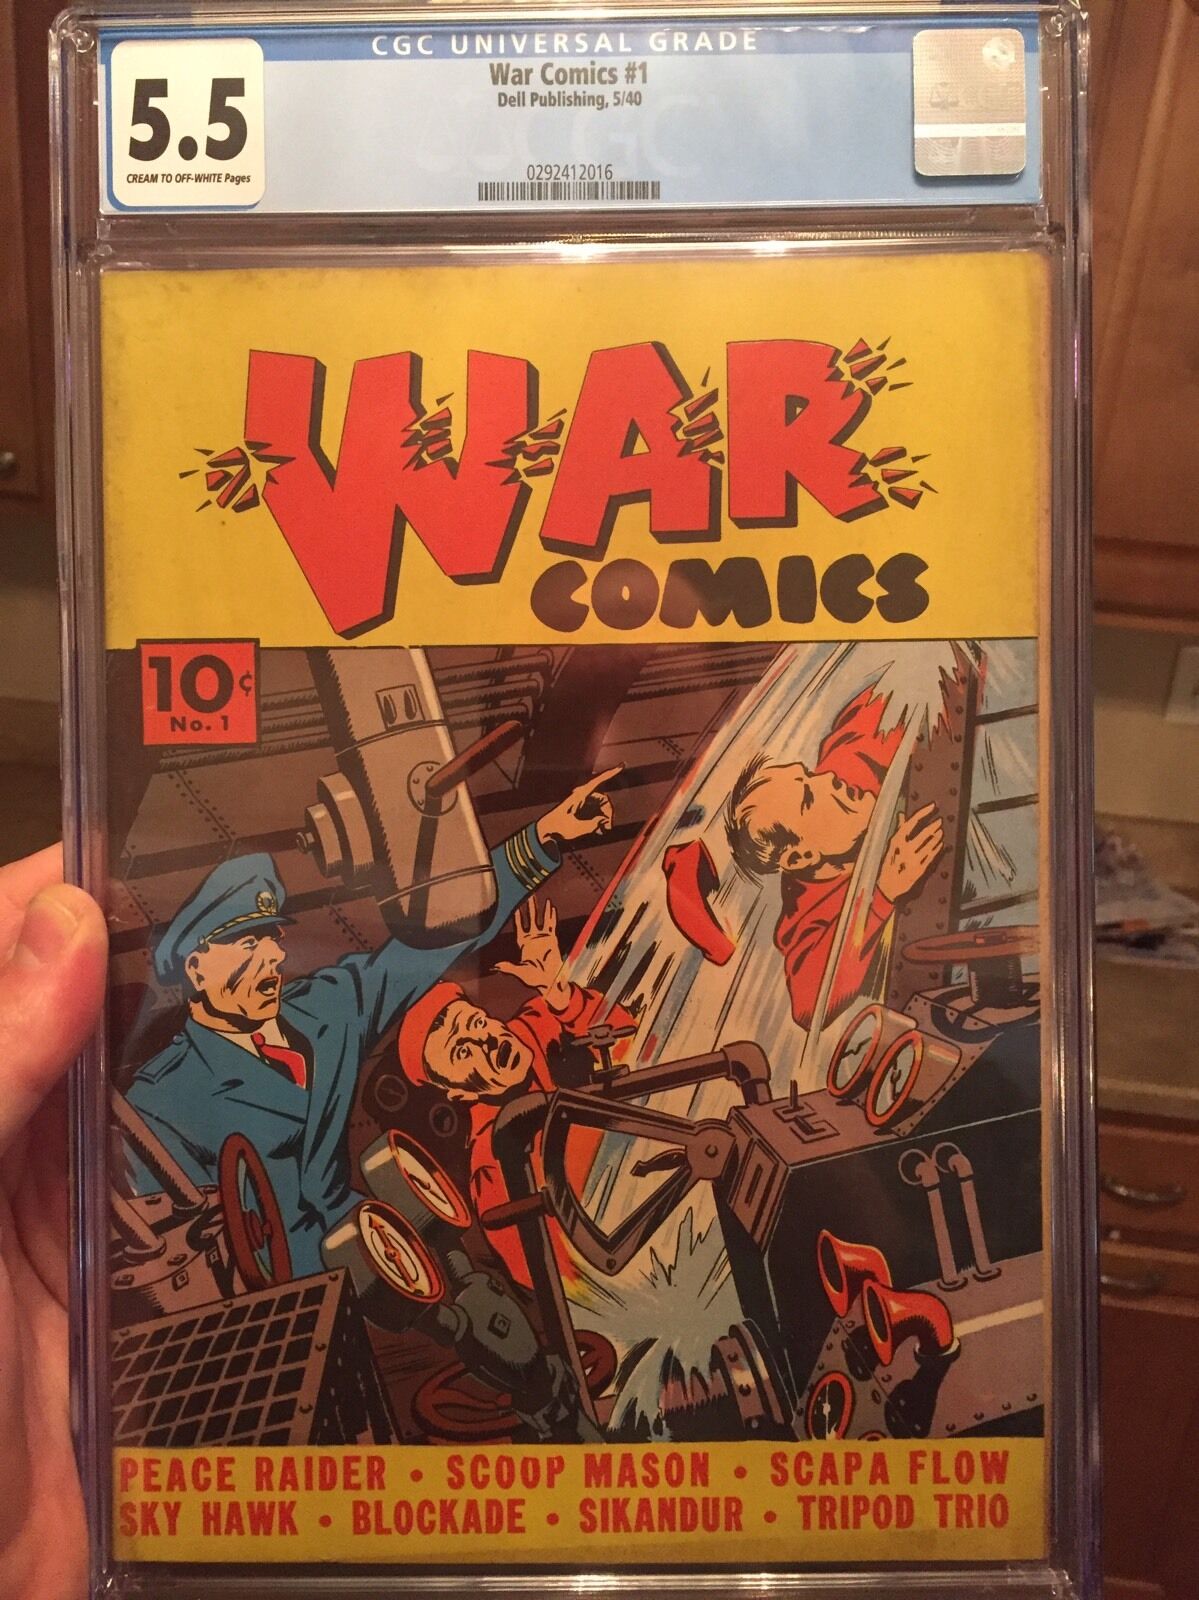 War Comics #1/CGC 5.5 CROW Universal/1st War Comic Book per Overstreet/1940